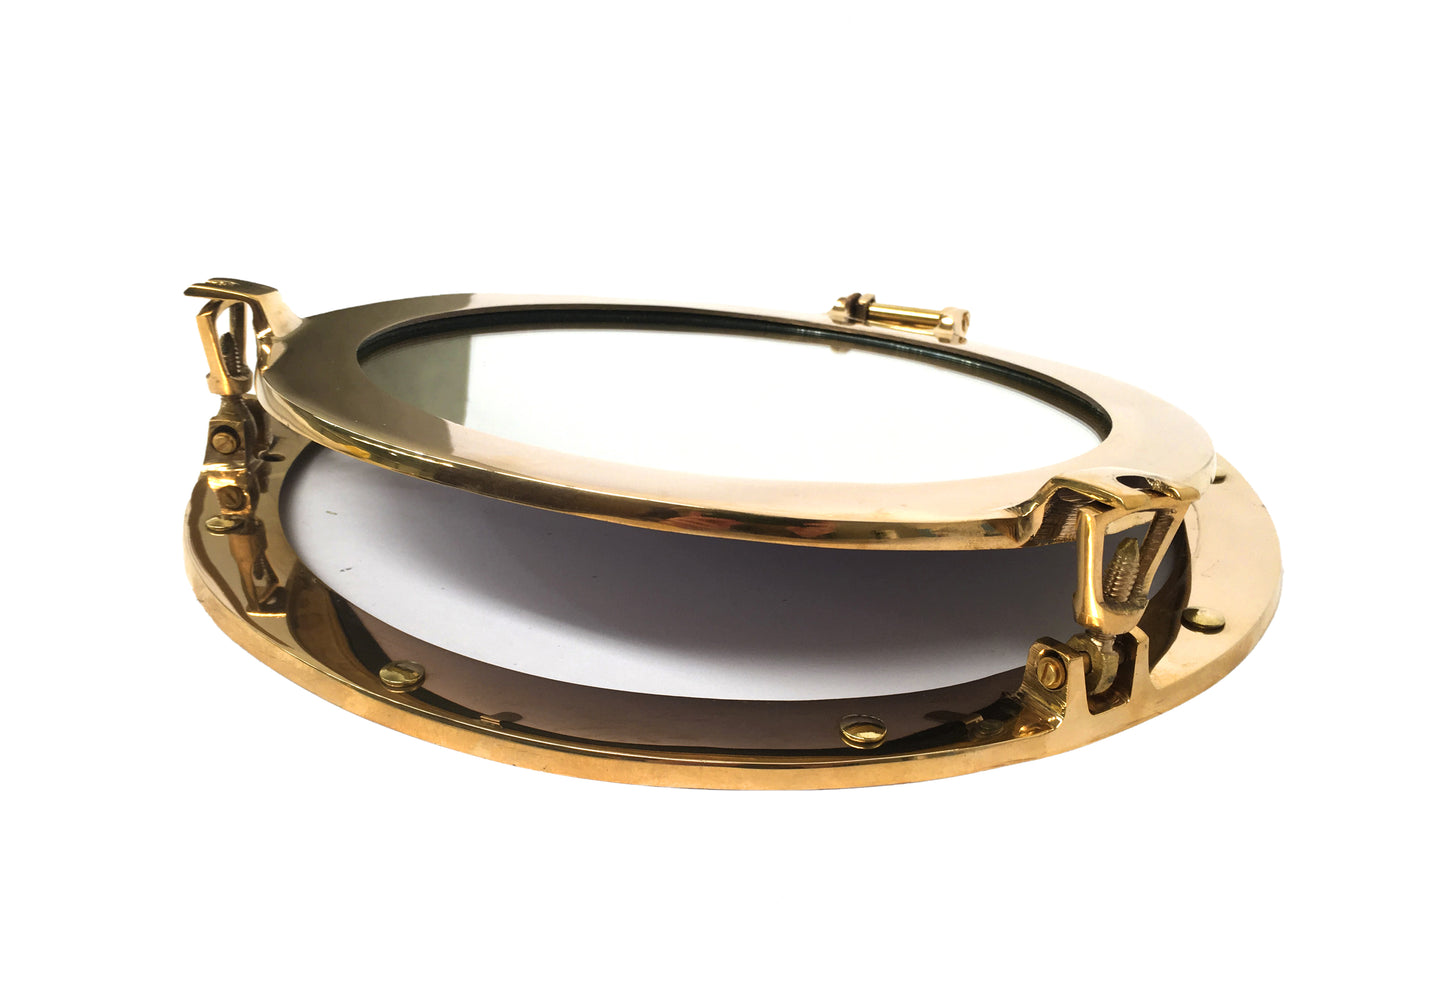 Brass 300mm Porthole Mirror